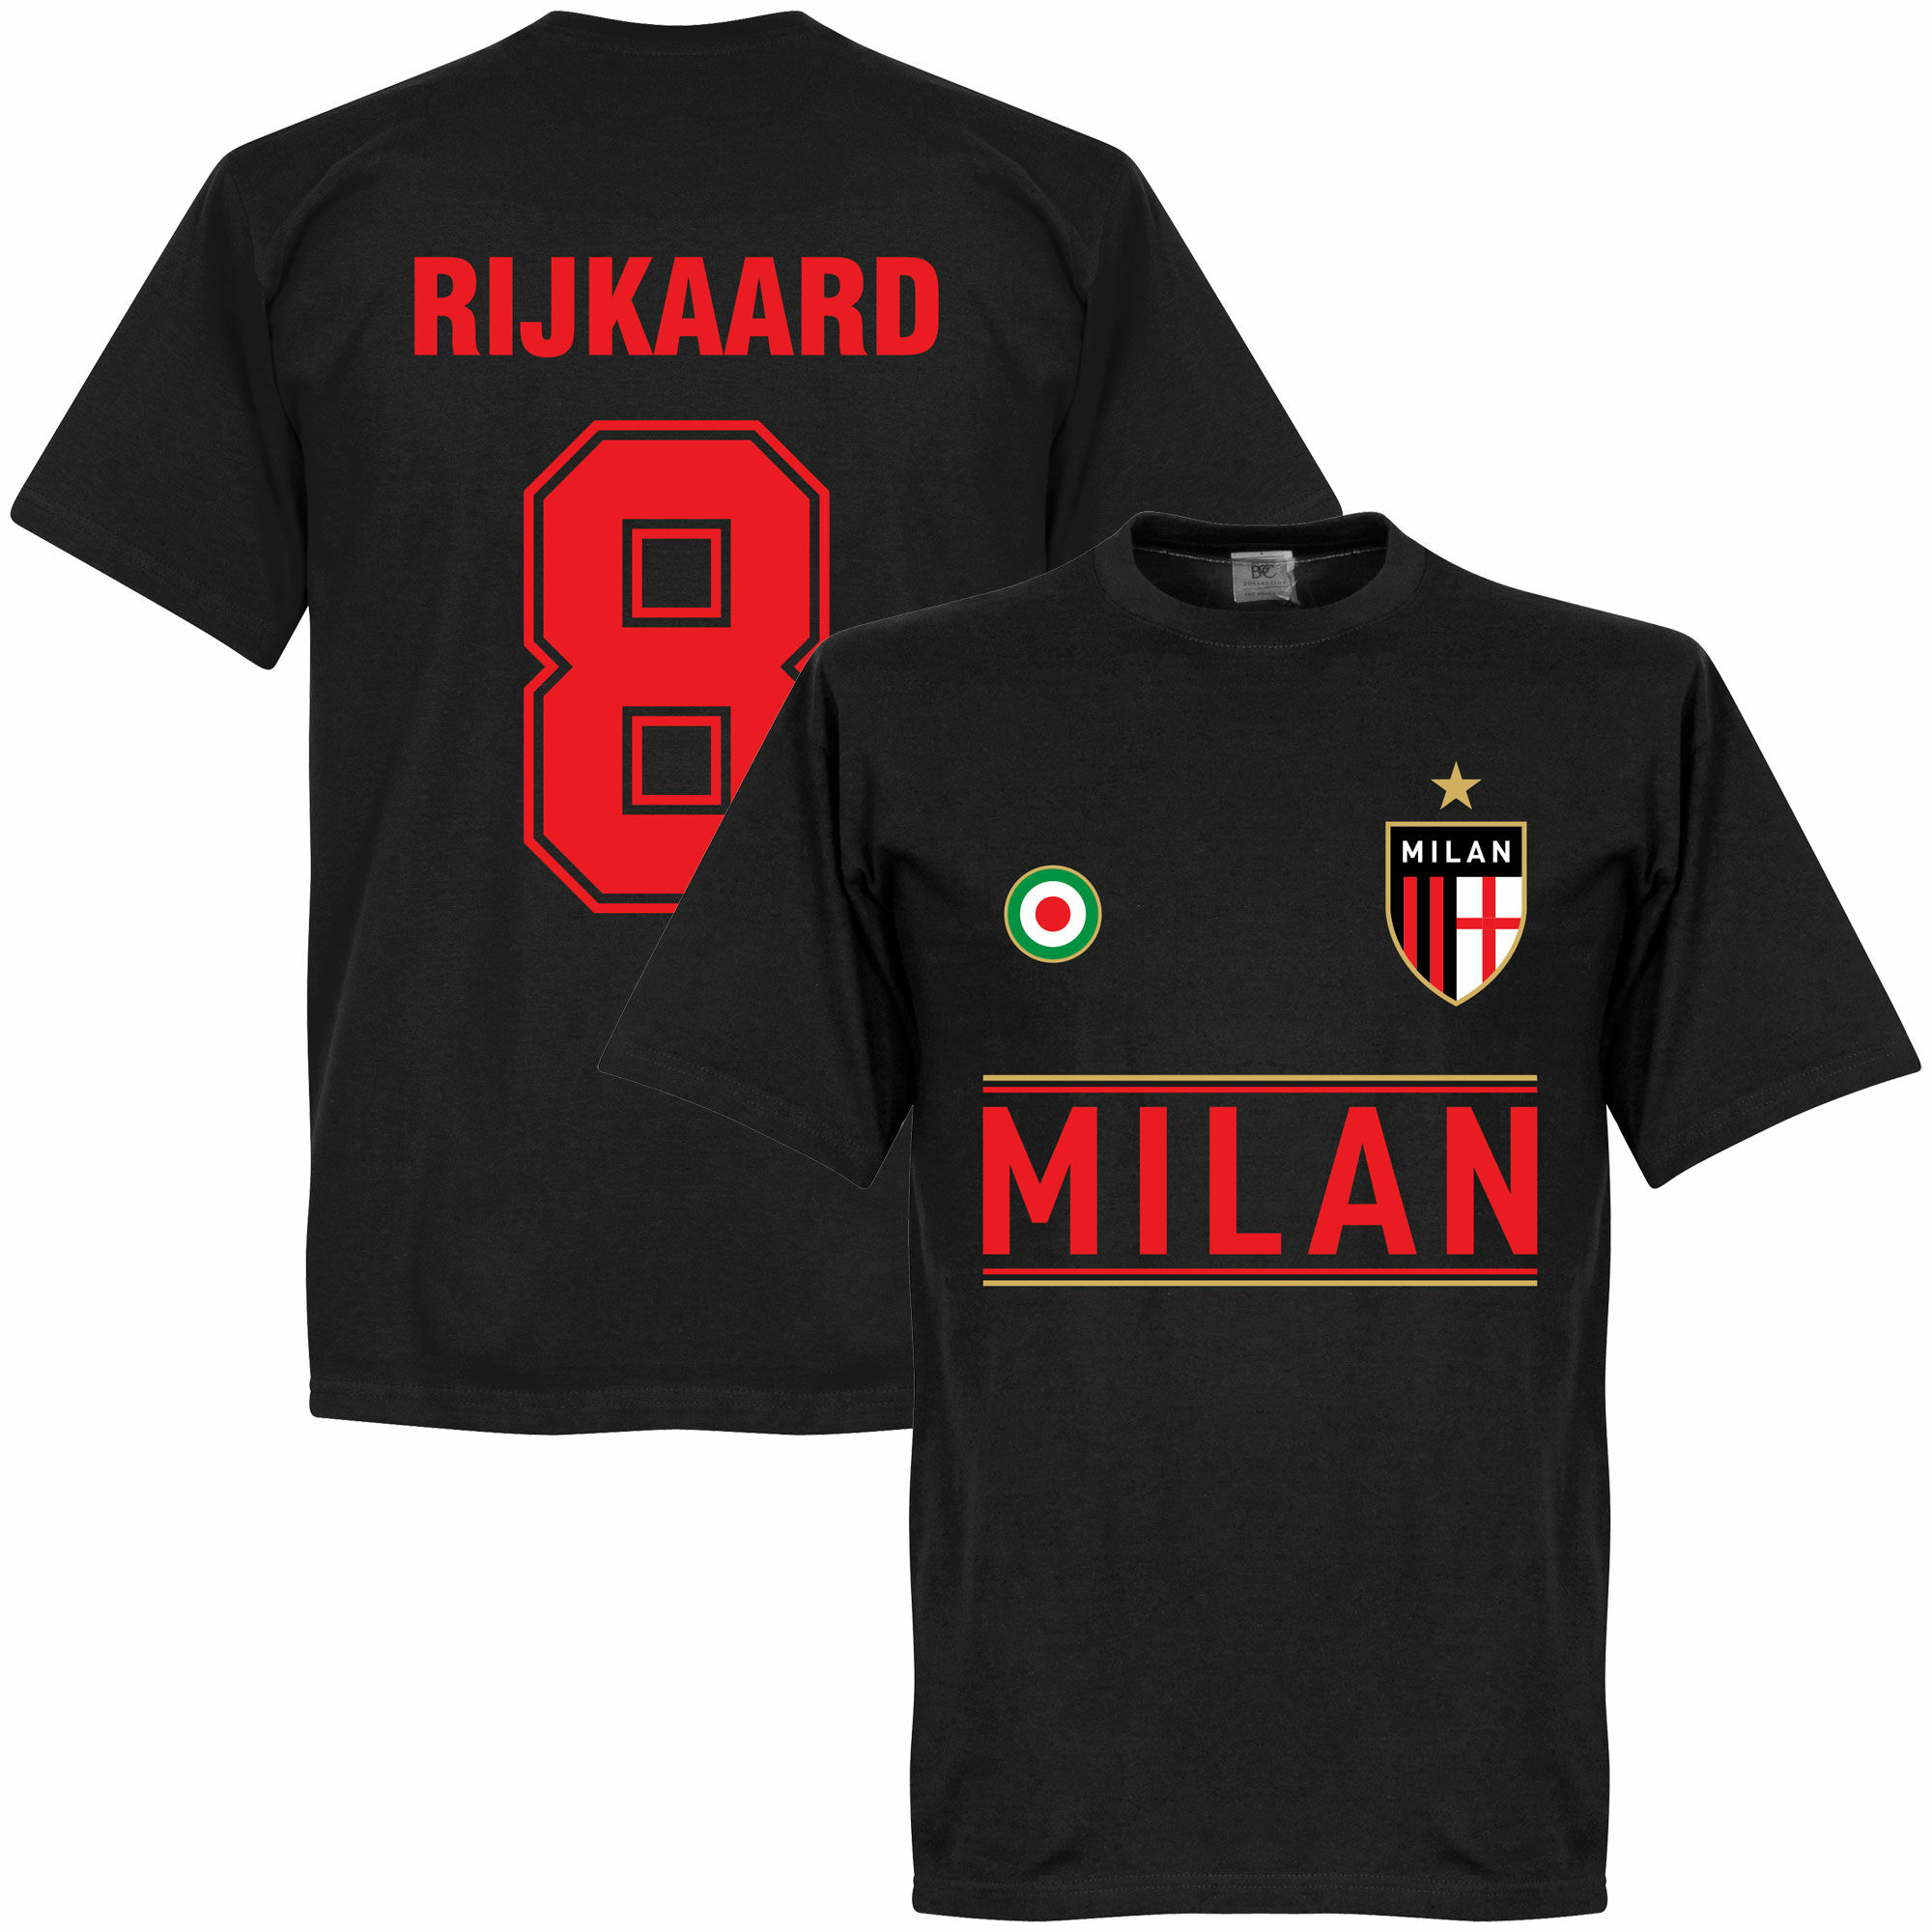 AC Milán - Tričko - Frank Rijkaard, číslo 8, černé